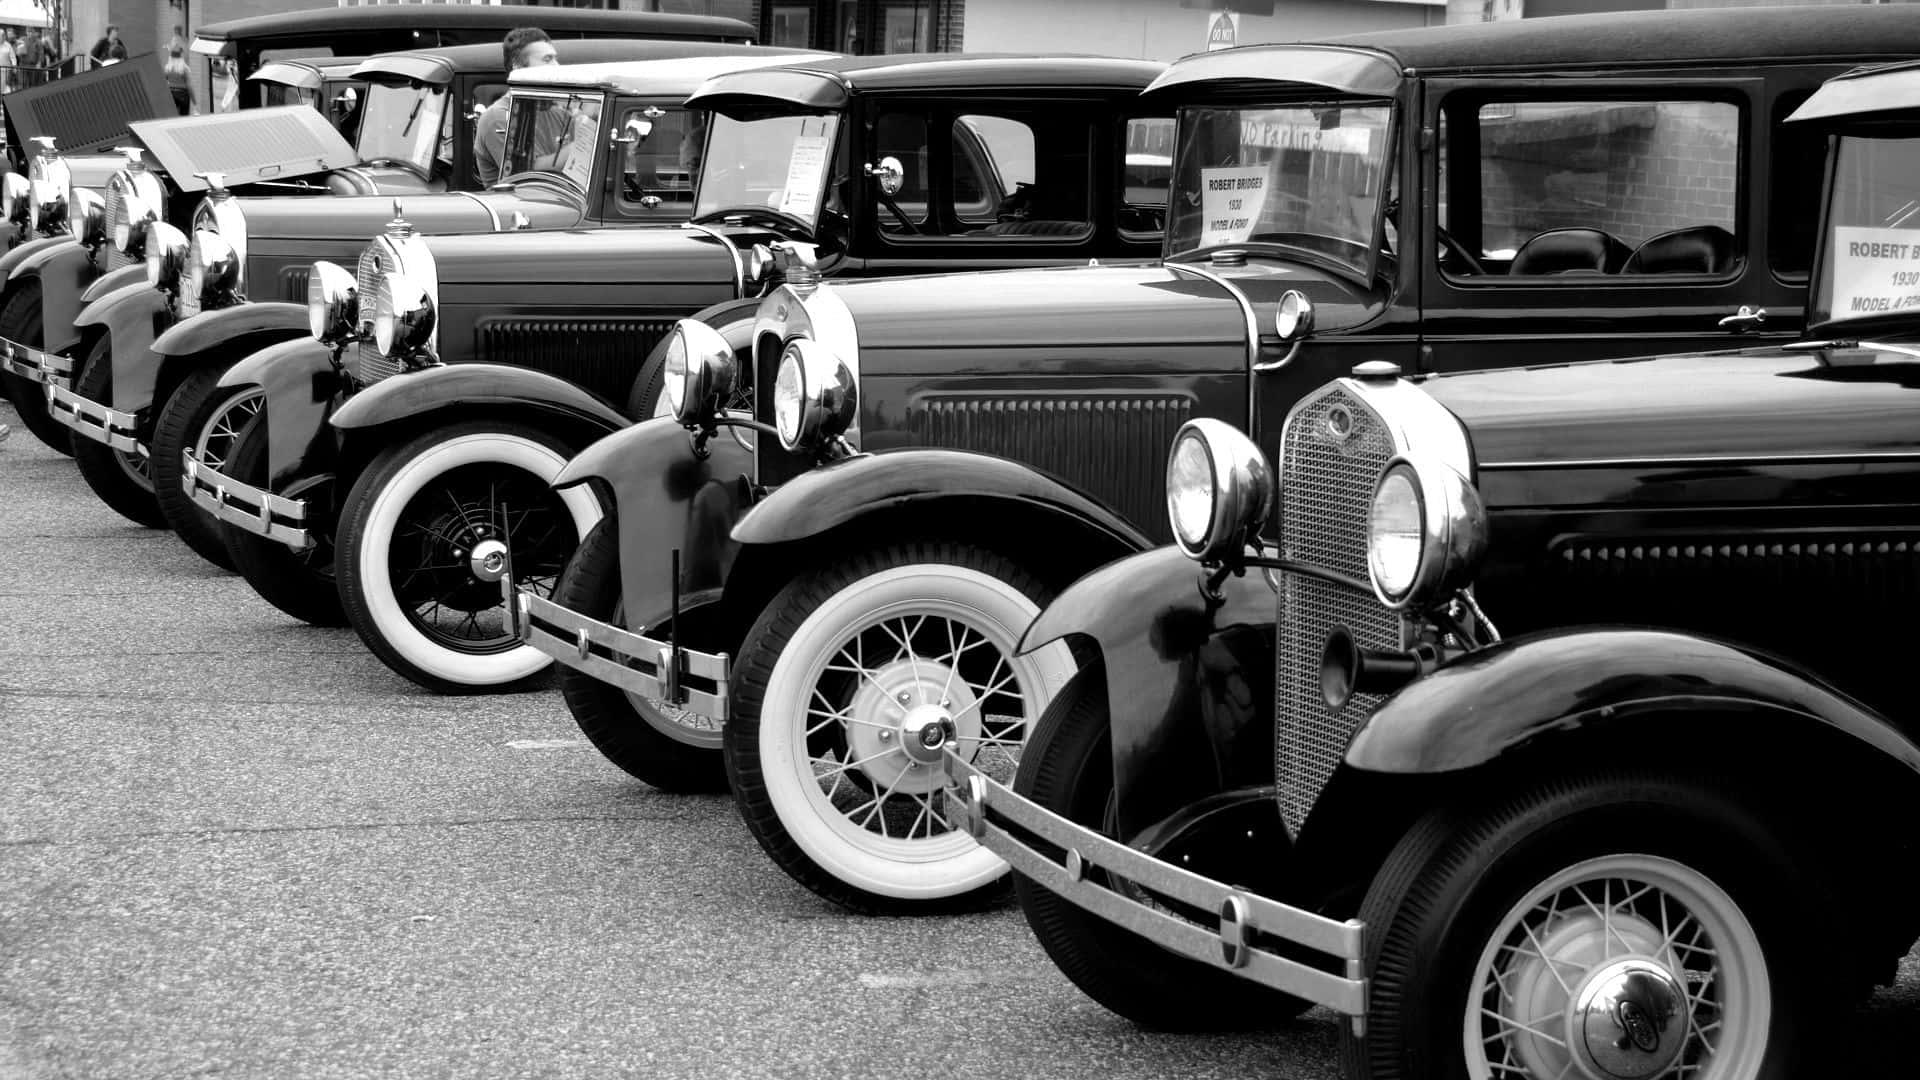 Caption: Timeless Elegance: Black and White Vintage Car Wallpaper